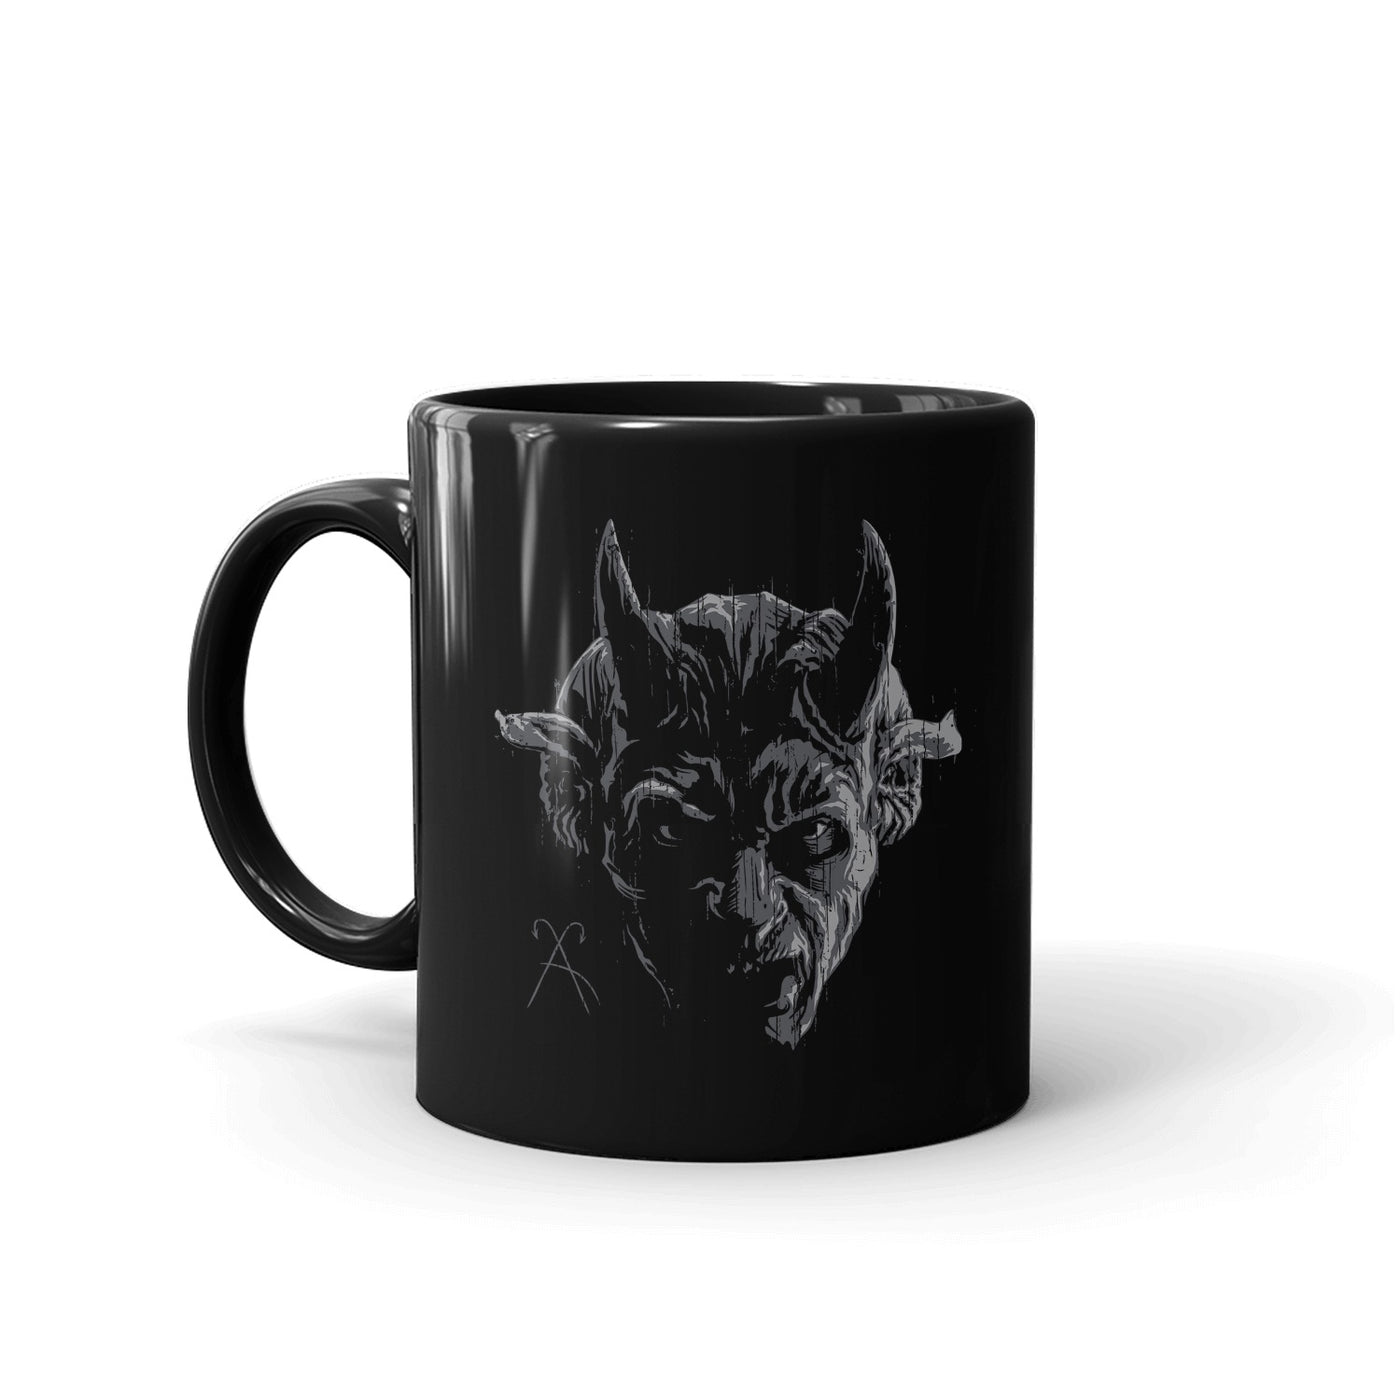 Annabelle Demon Black Mug